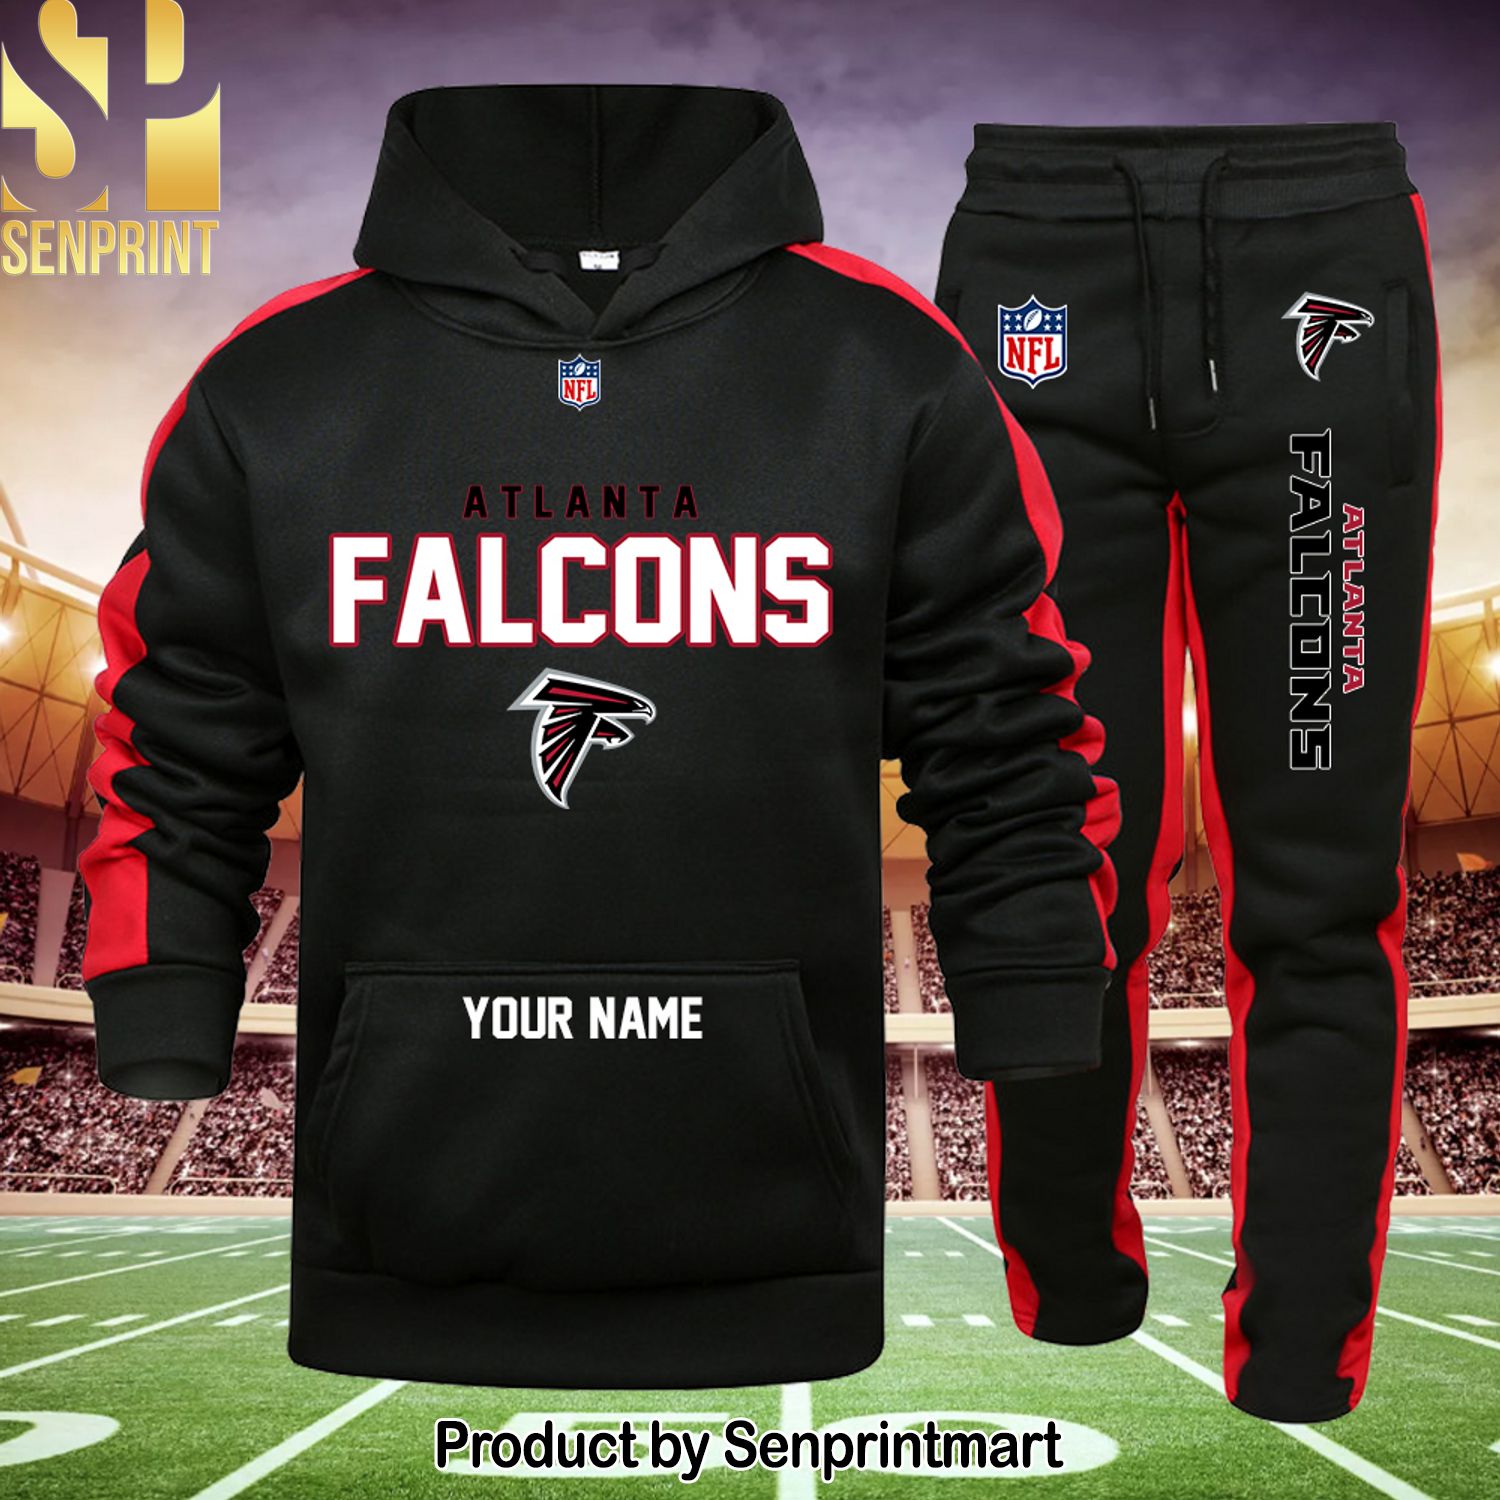 NFL Atlanta Falcons Full Print Classic Shirt and Sweatpants